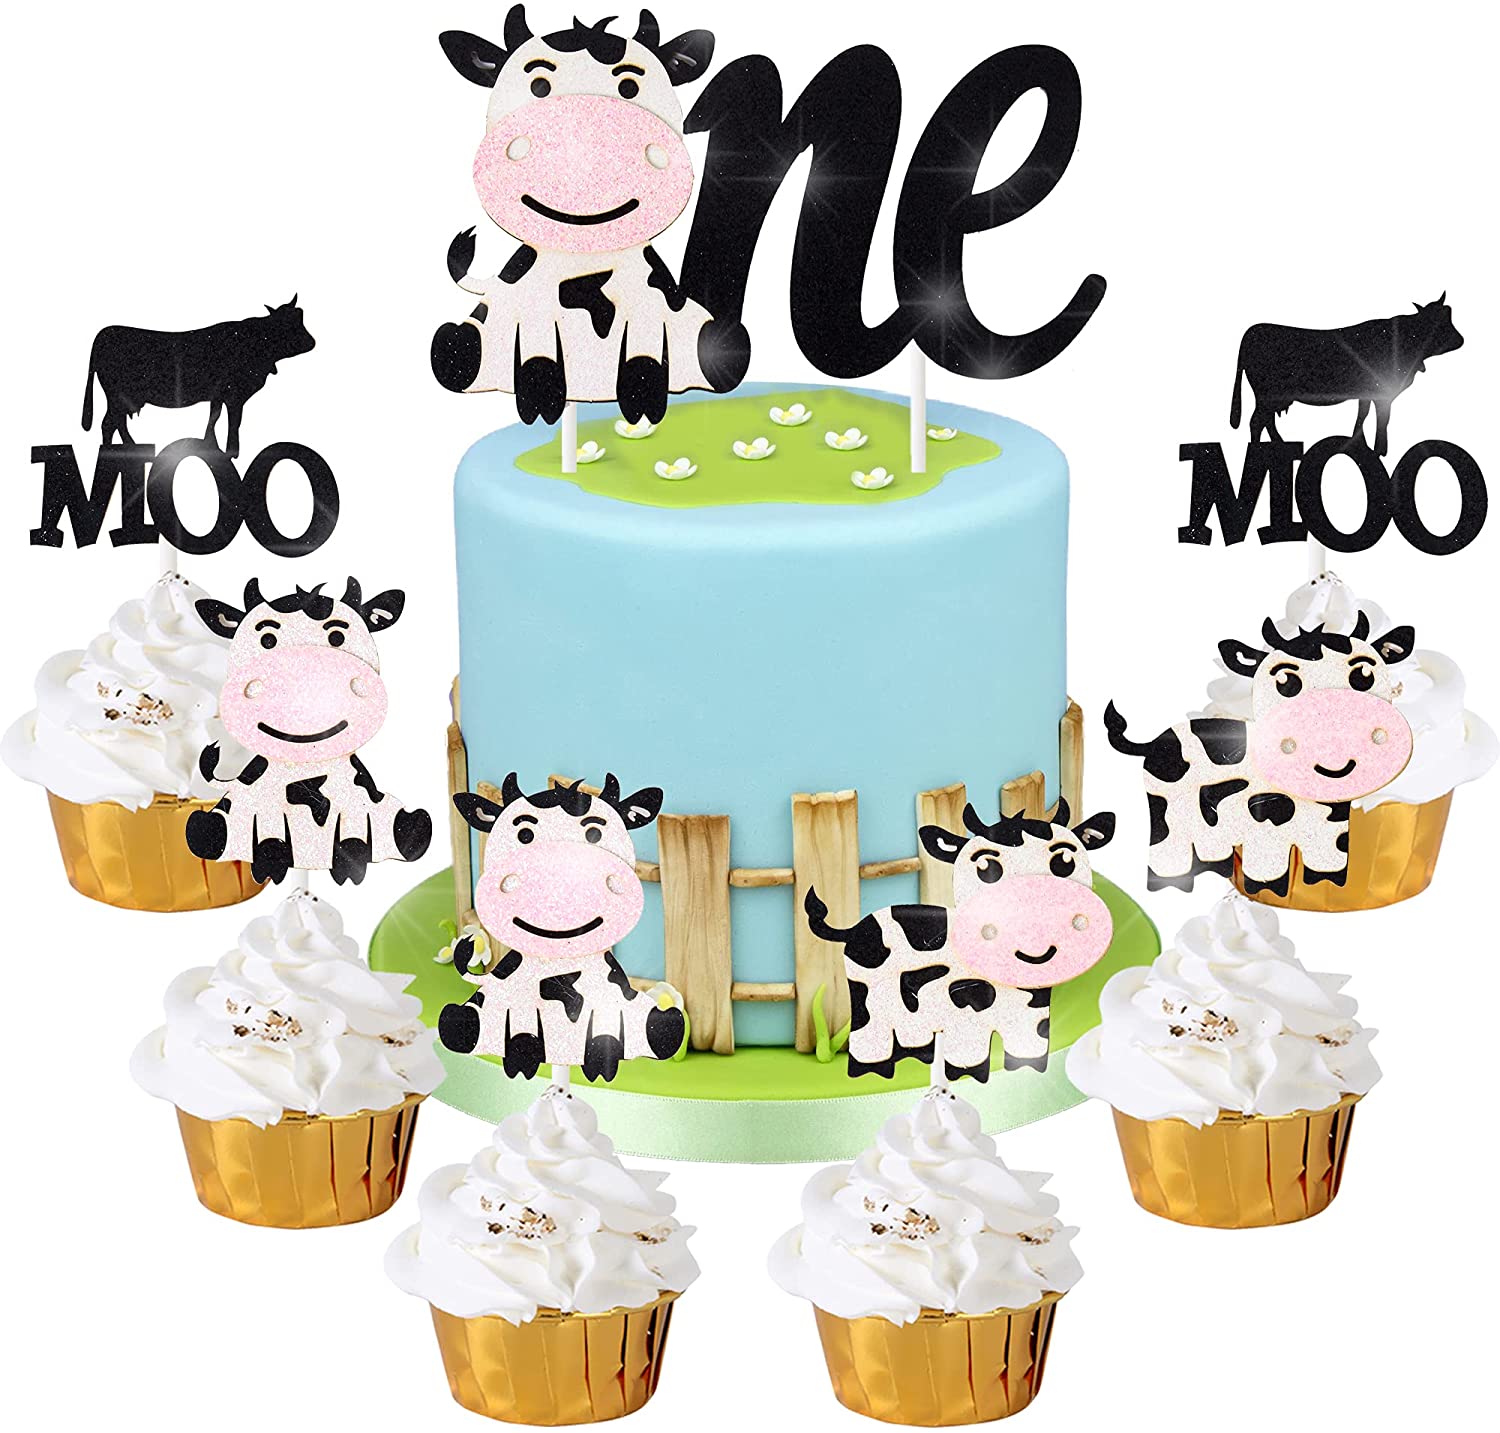 Cow Theme Cake - Johnnie Cupcakes